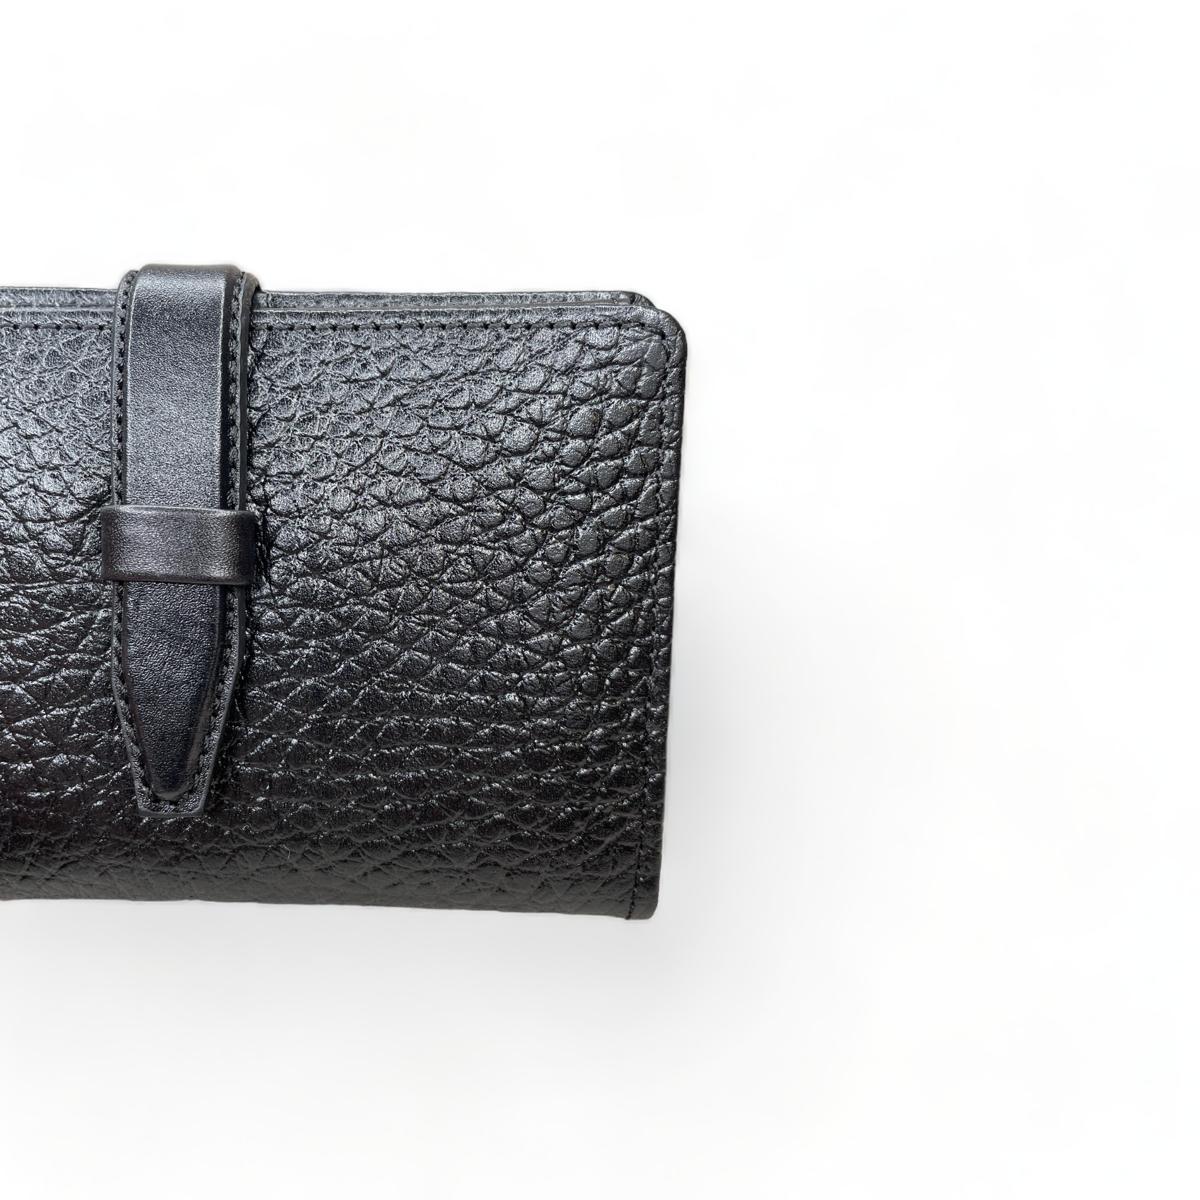 LeatherLuxe - Black Wallet Genuine Leather Wallet; Card Holder Genuine leather Designer Premium leather bag for women leather hobo tote messenger bag Leather Accessories Leather Shop Leather Goods